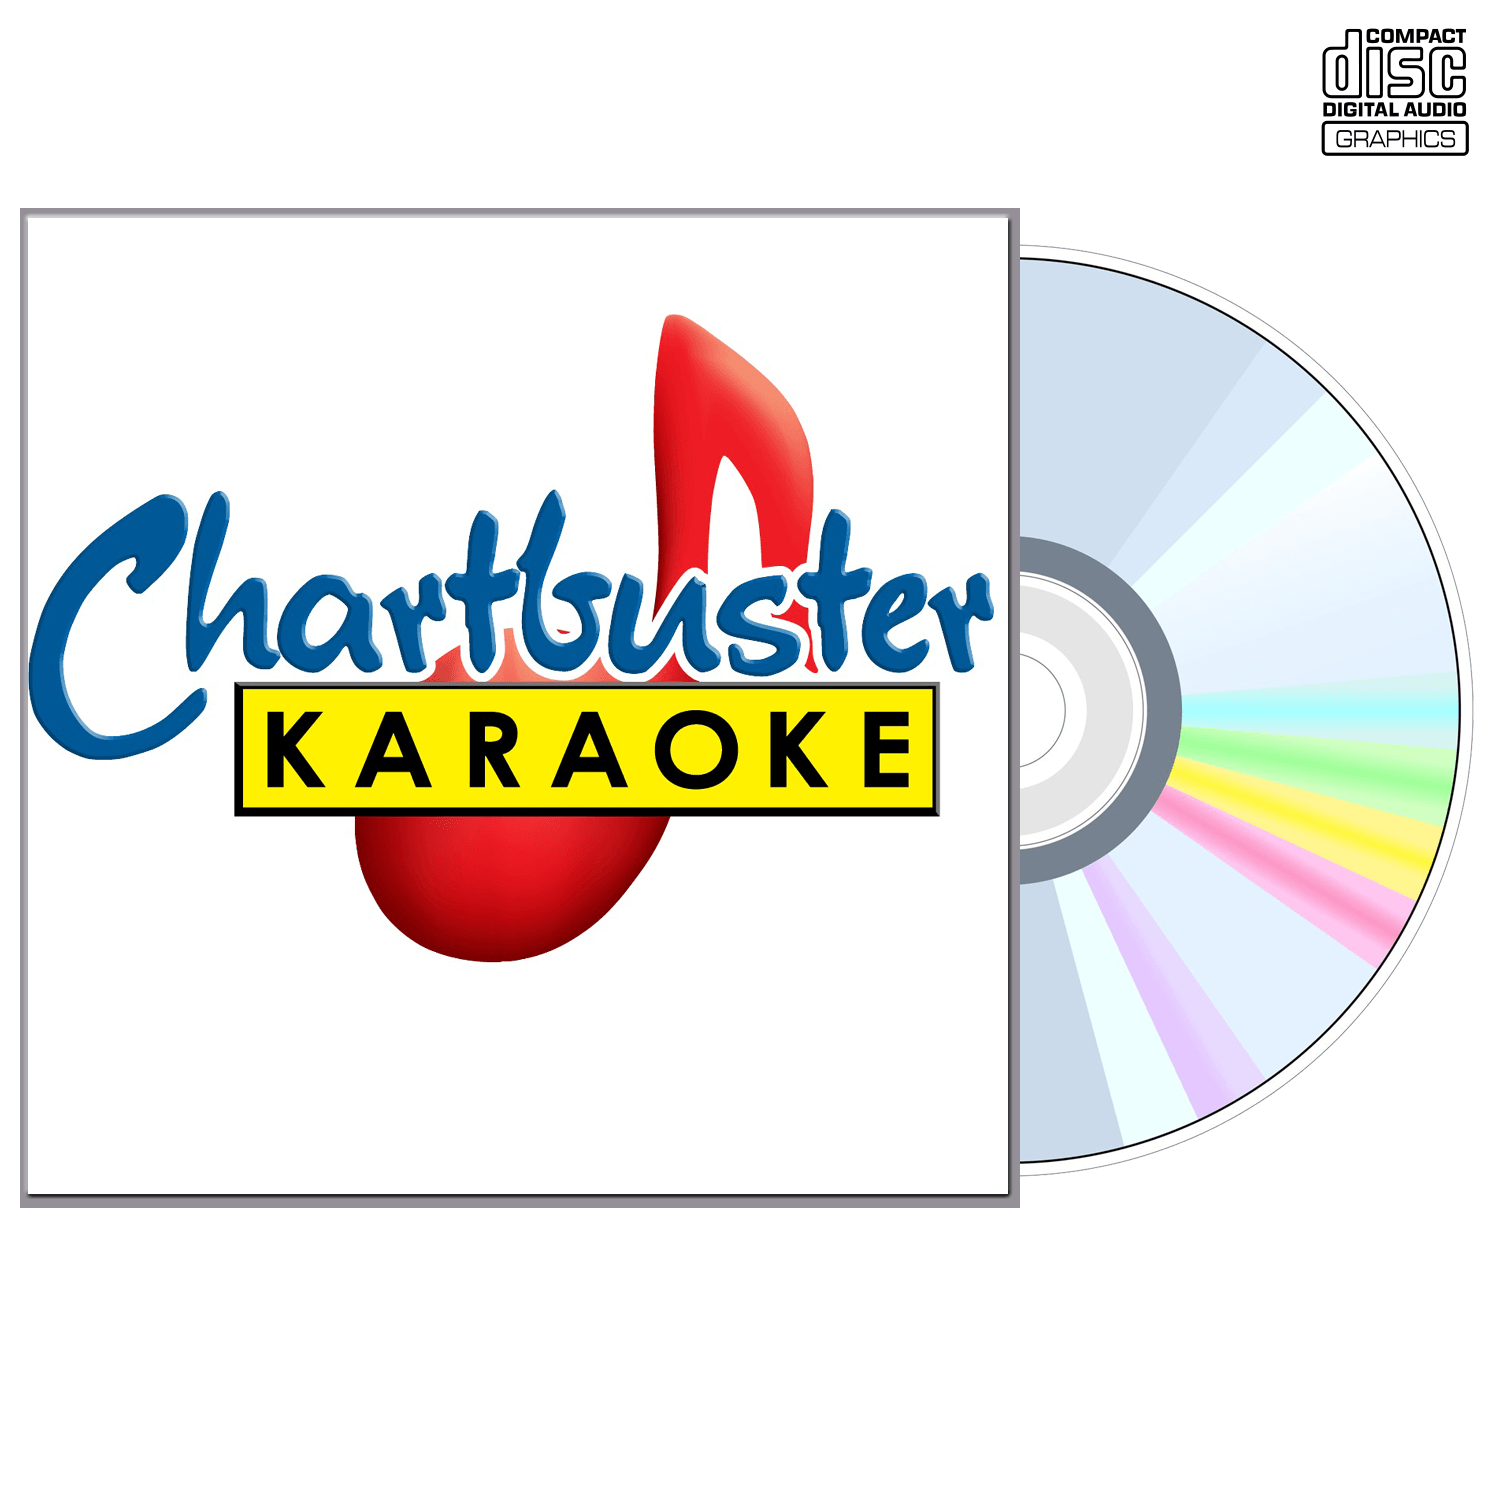 Ultimate 90's Collection V09 - CD+G - Chartbuster Karaoke - Karaoke Home Entertainment